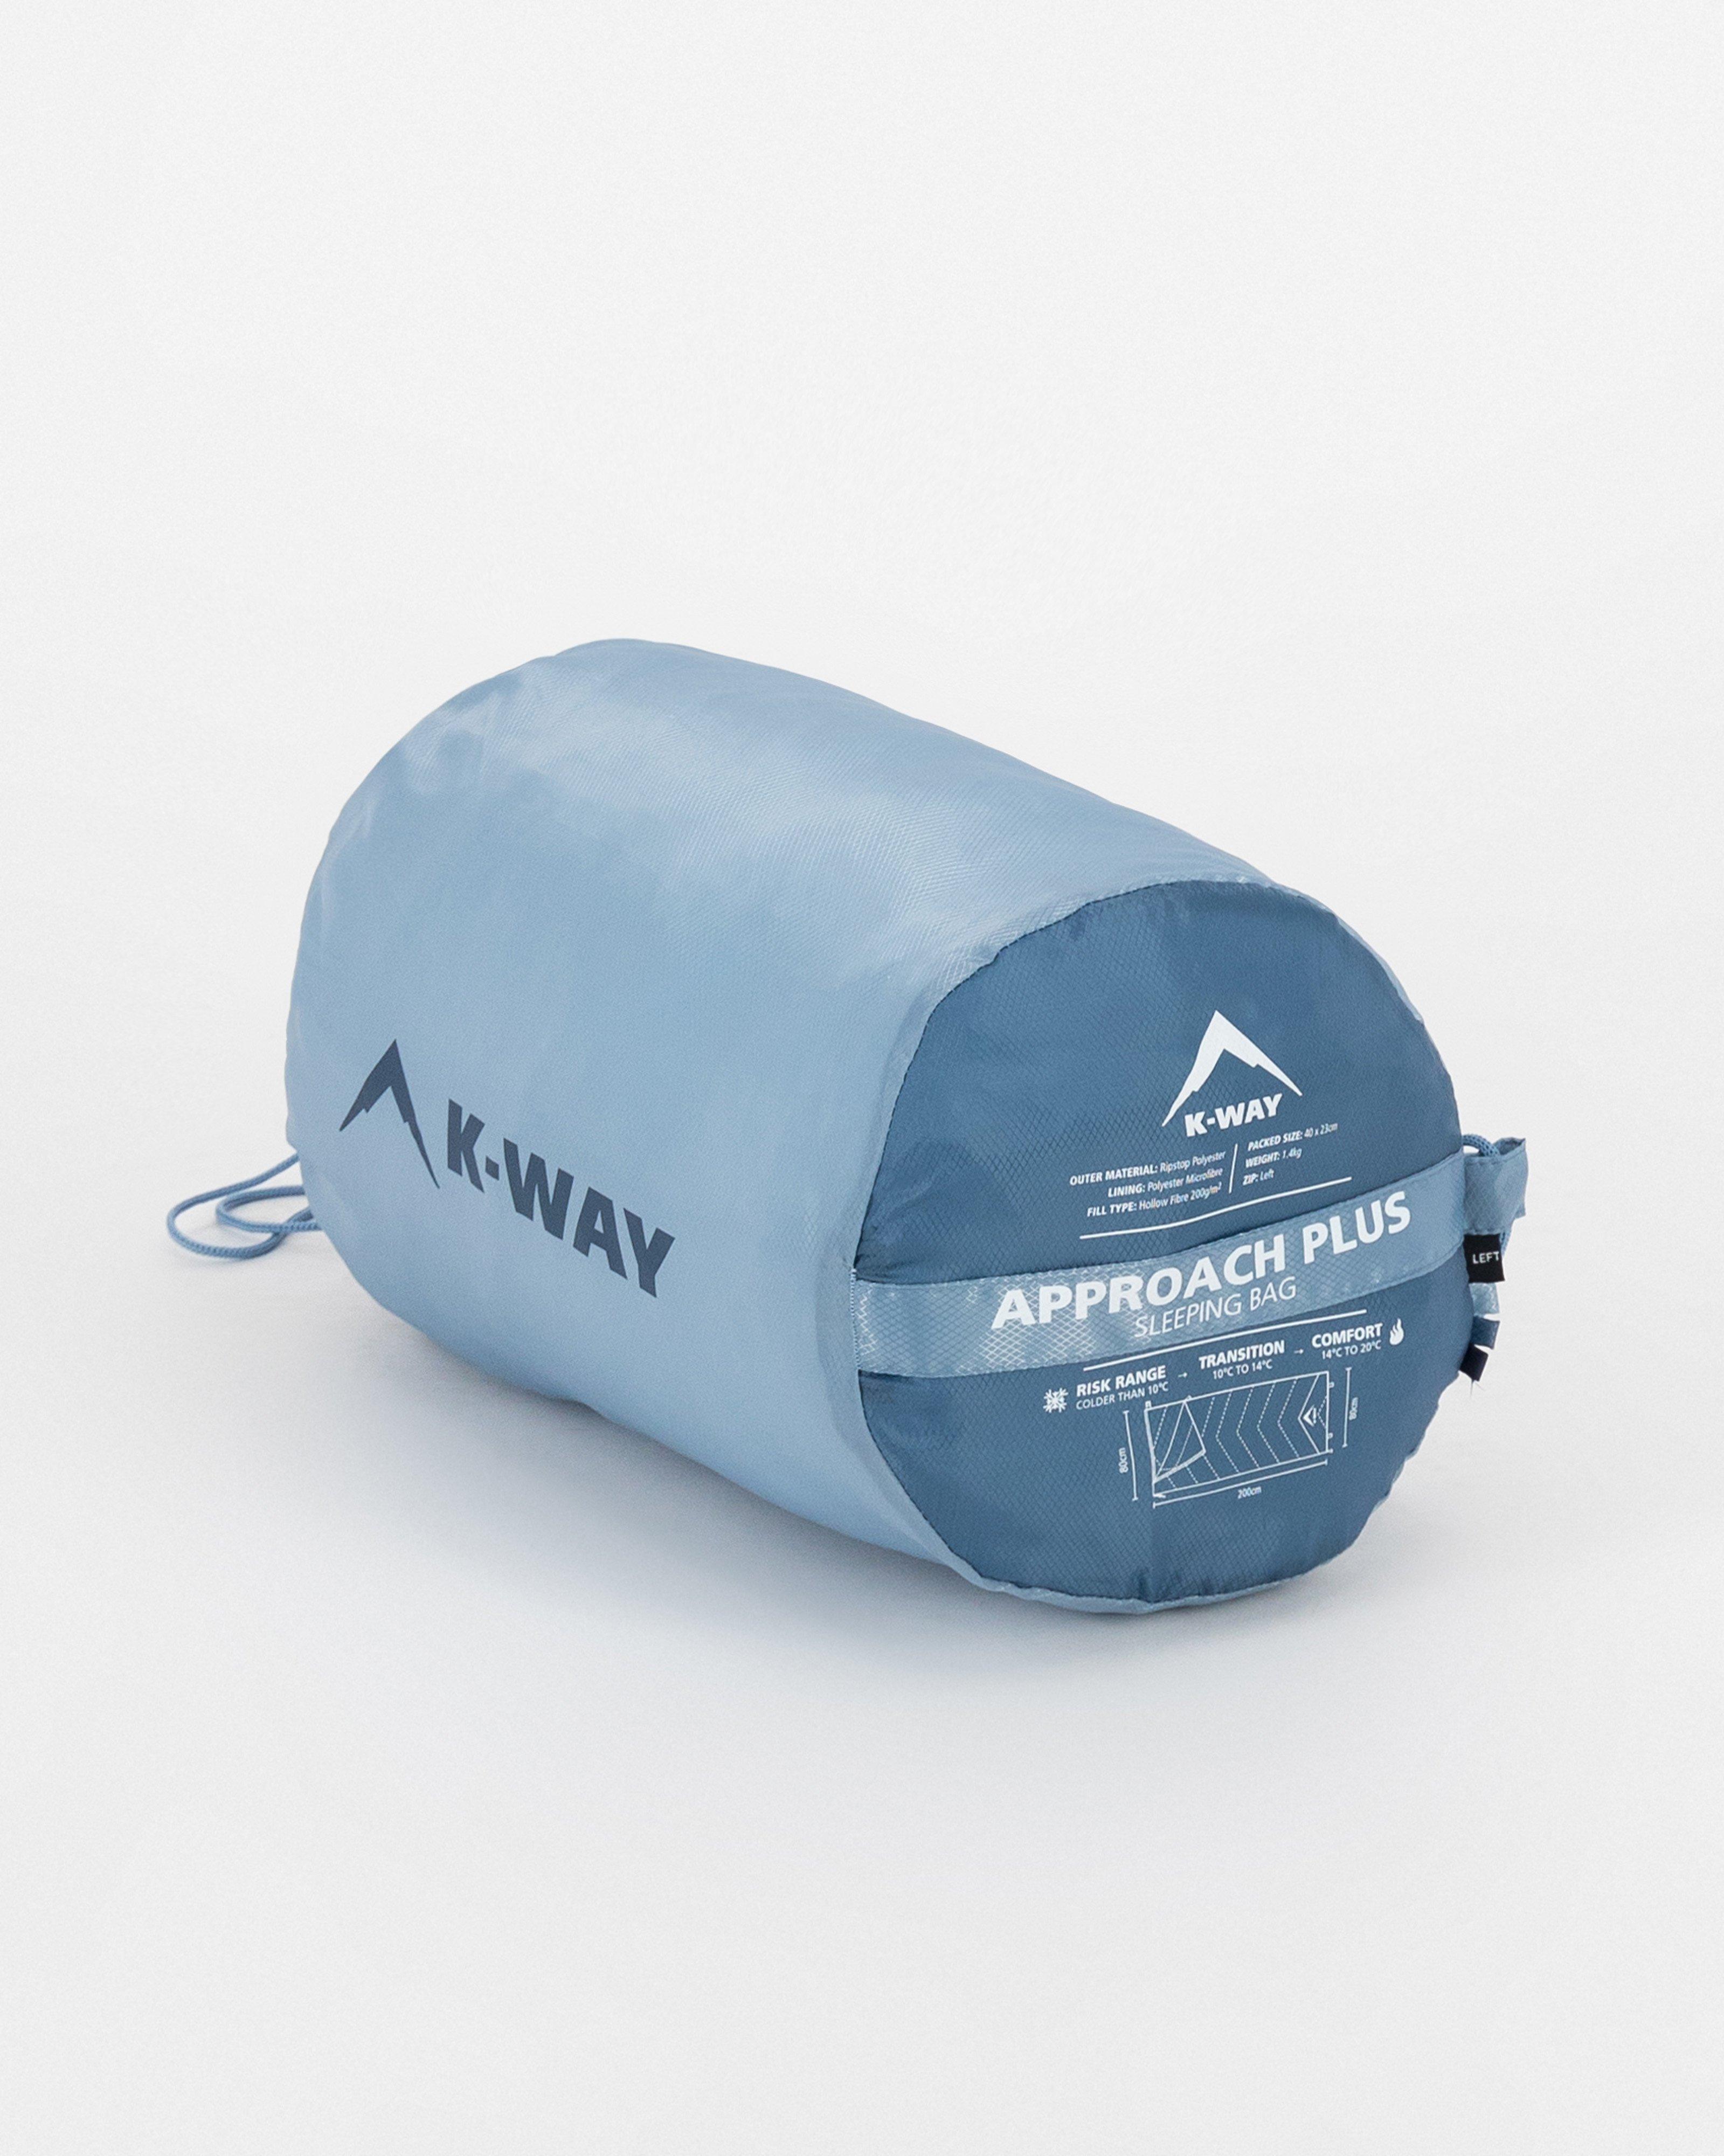 K-Way Approach Plus 10-14°C Sleeping Bag -  Mid Blue